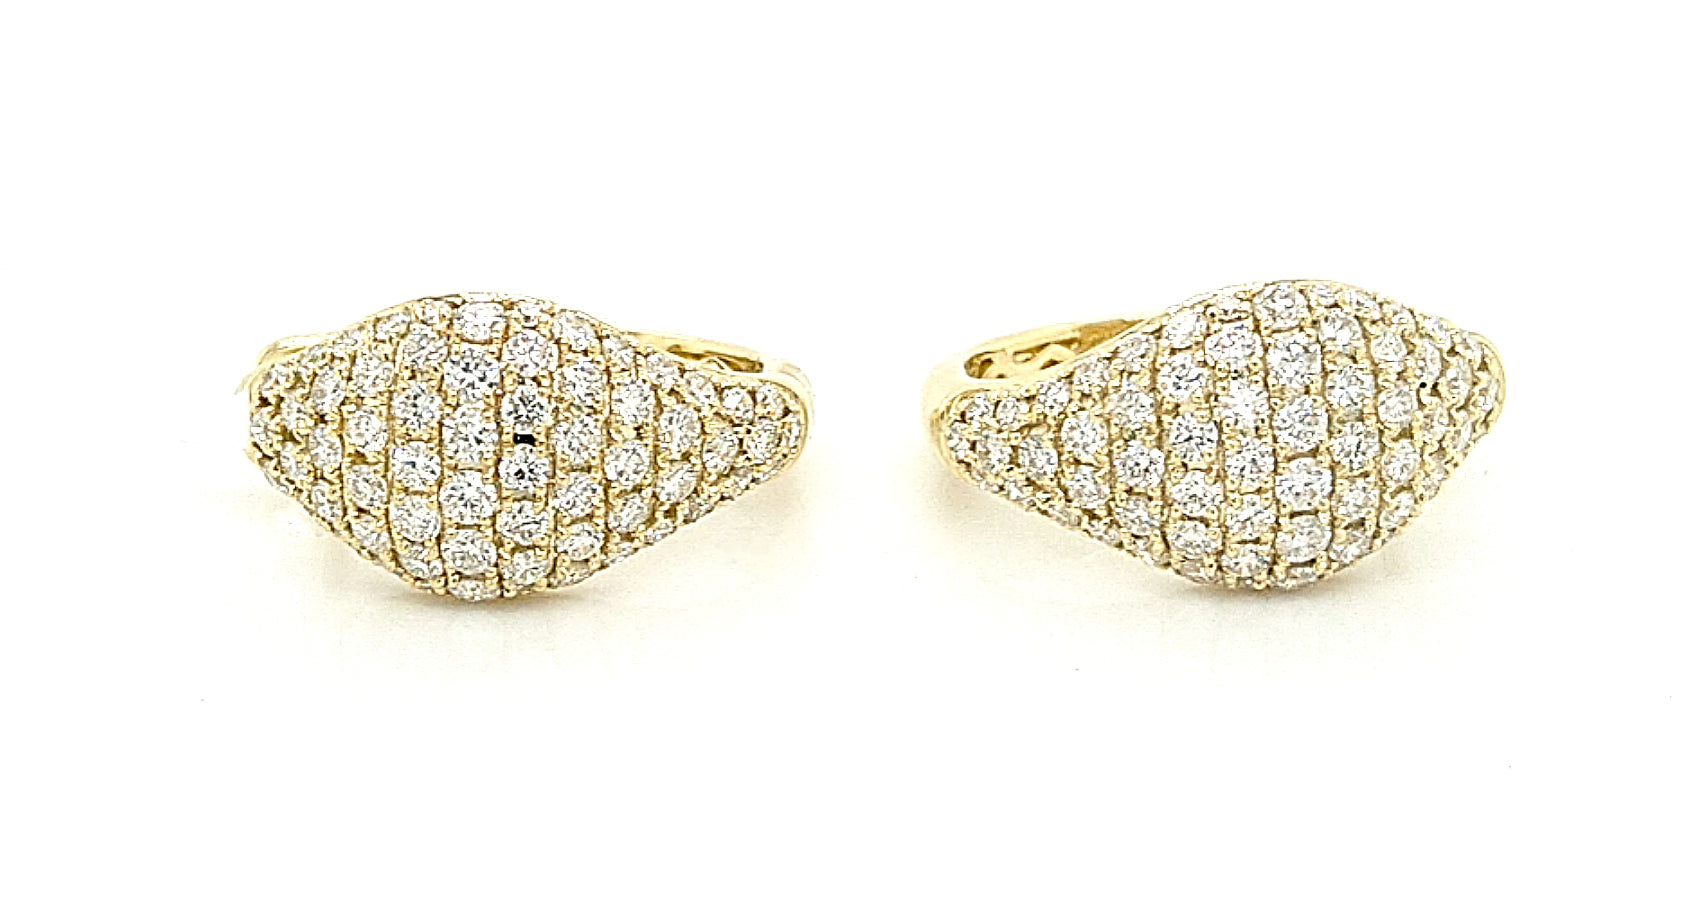 14K Yellow Gold Diamond Pave Huggie Earrings 2 Carat Total Diamond Weight